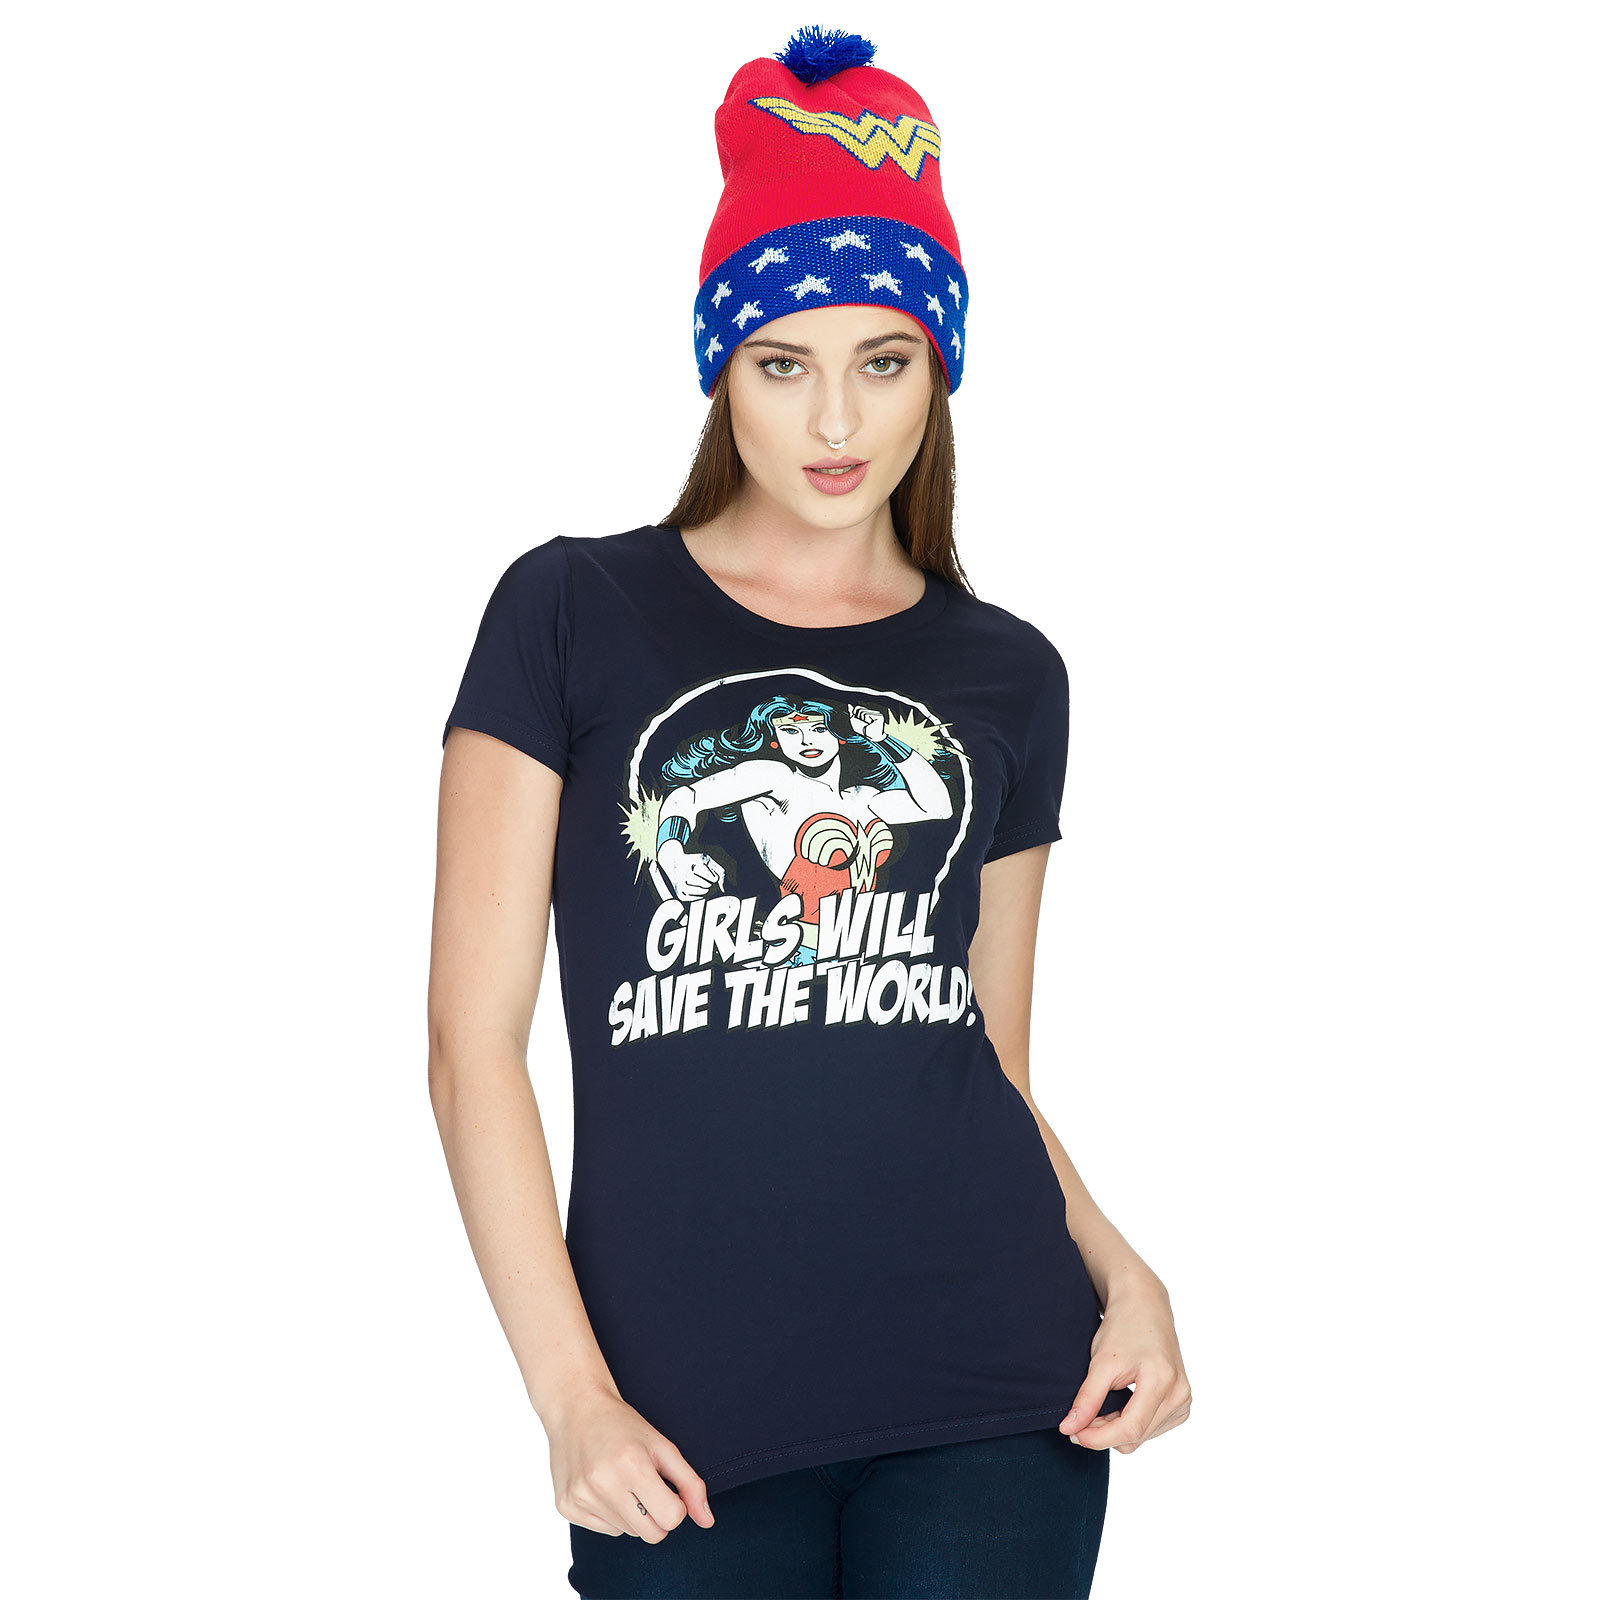 Wonder Woman - Girls Will Save The World Girlie Shirt blau